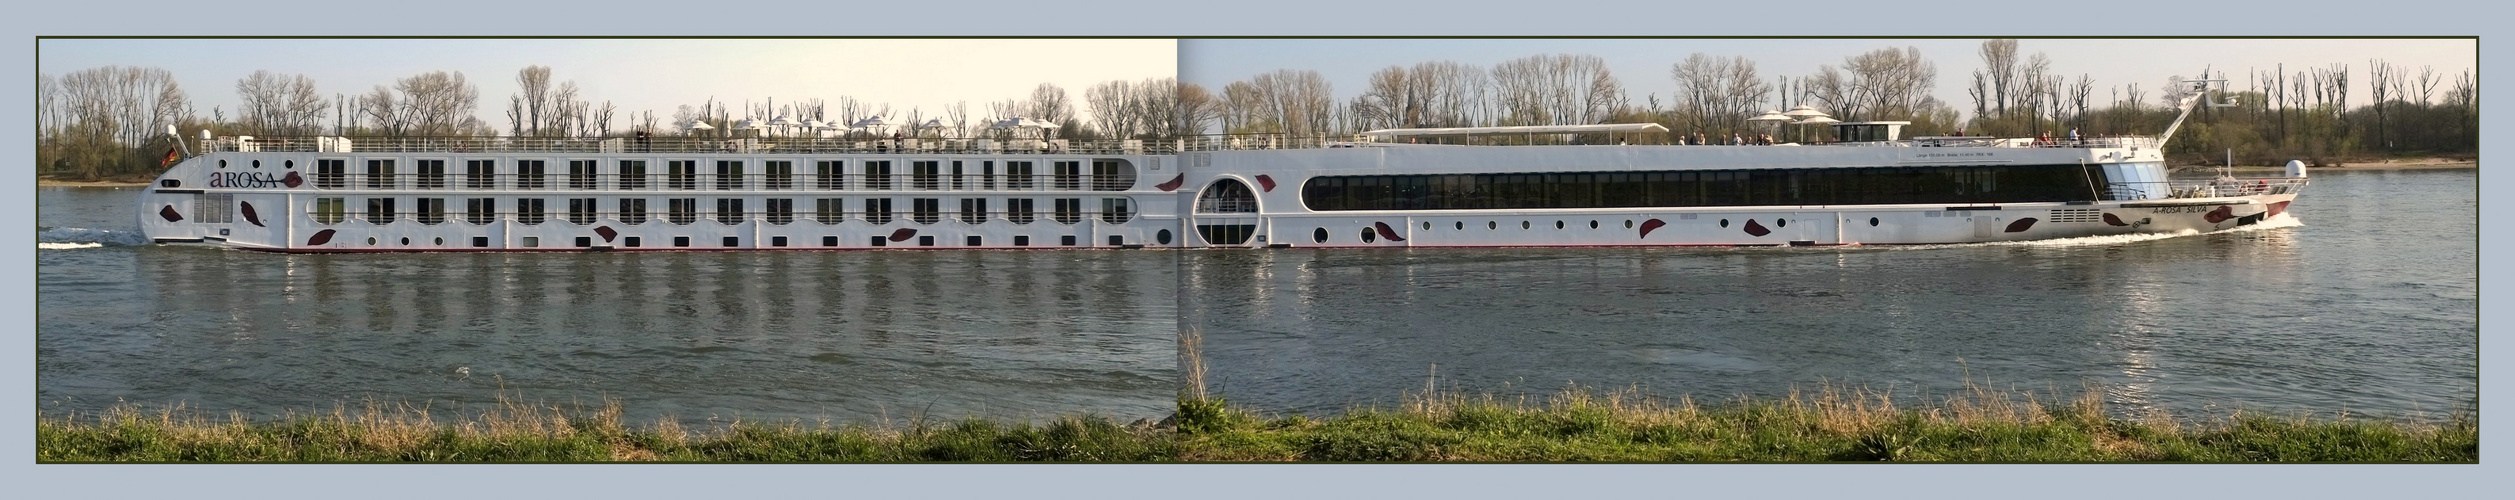 Rheinschiff AROSA